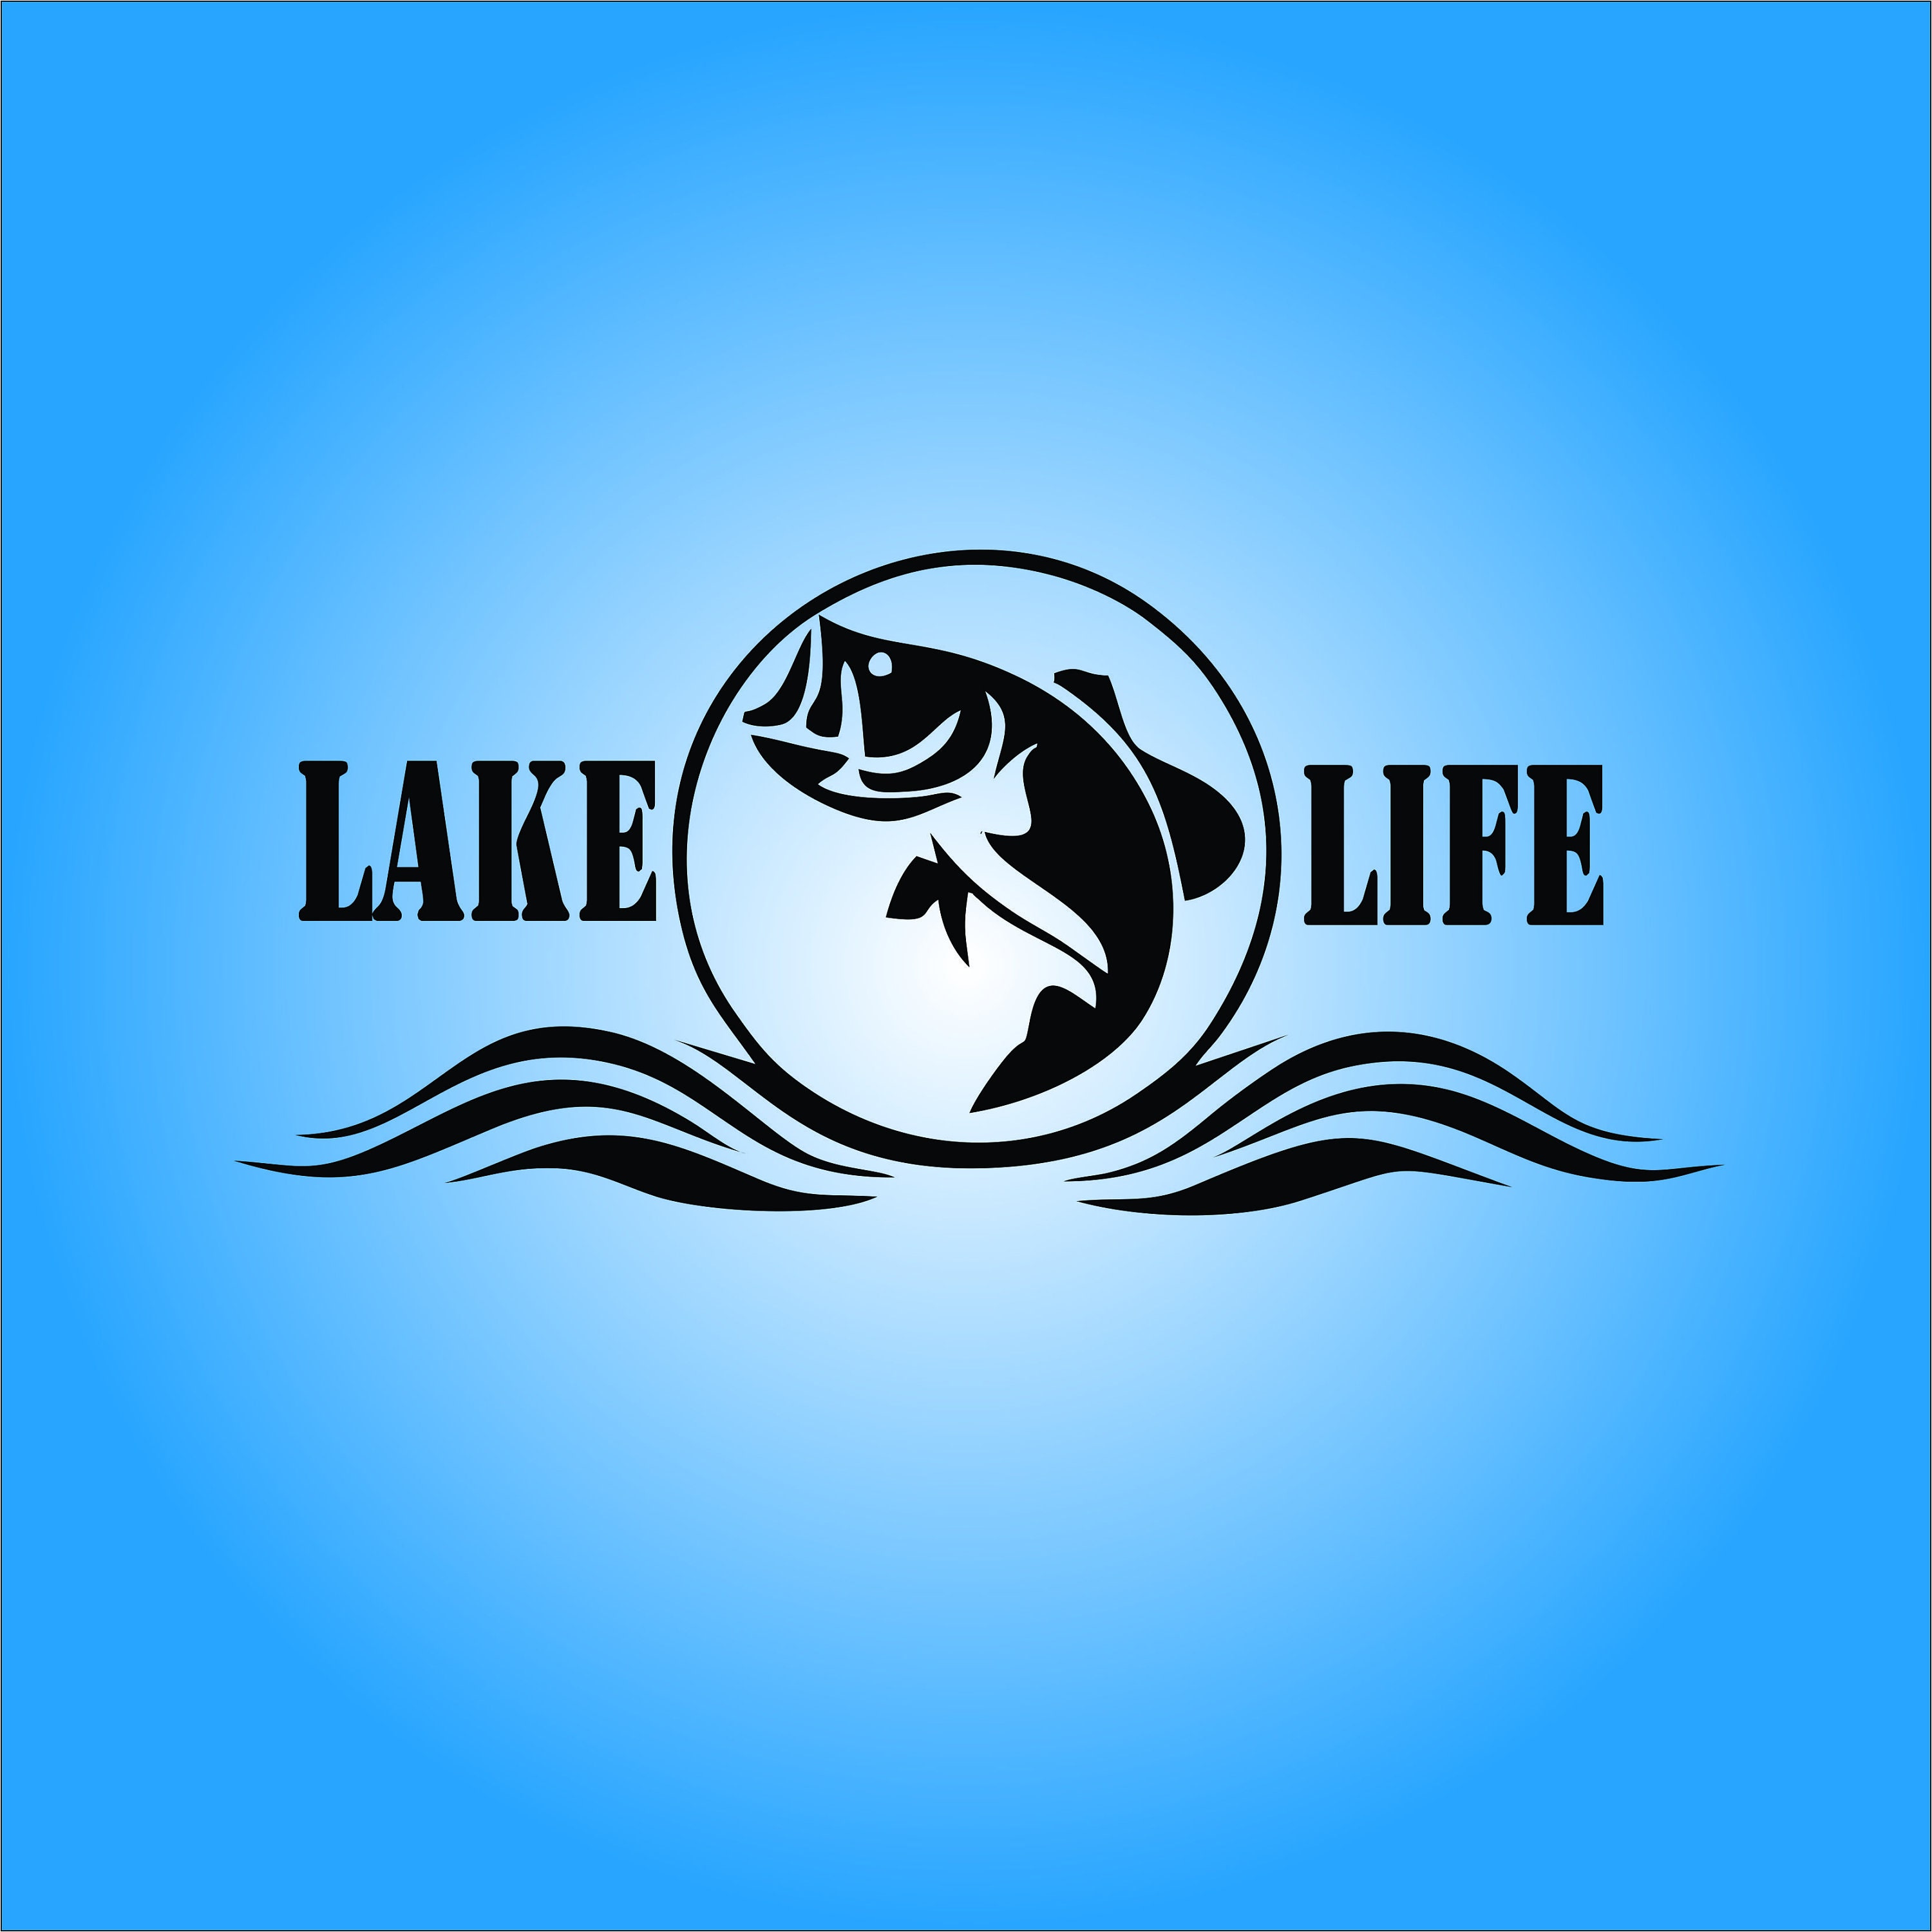 LAKE LIFE FISH Decal. Free Shipping. 